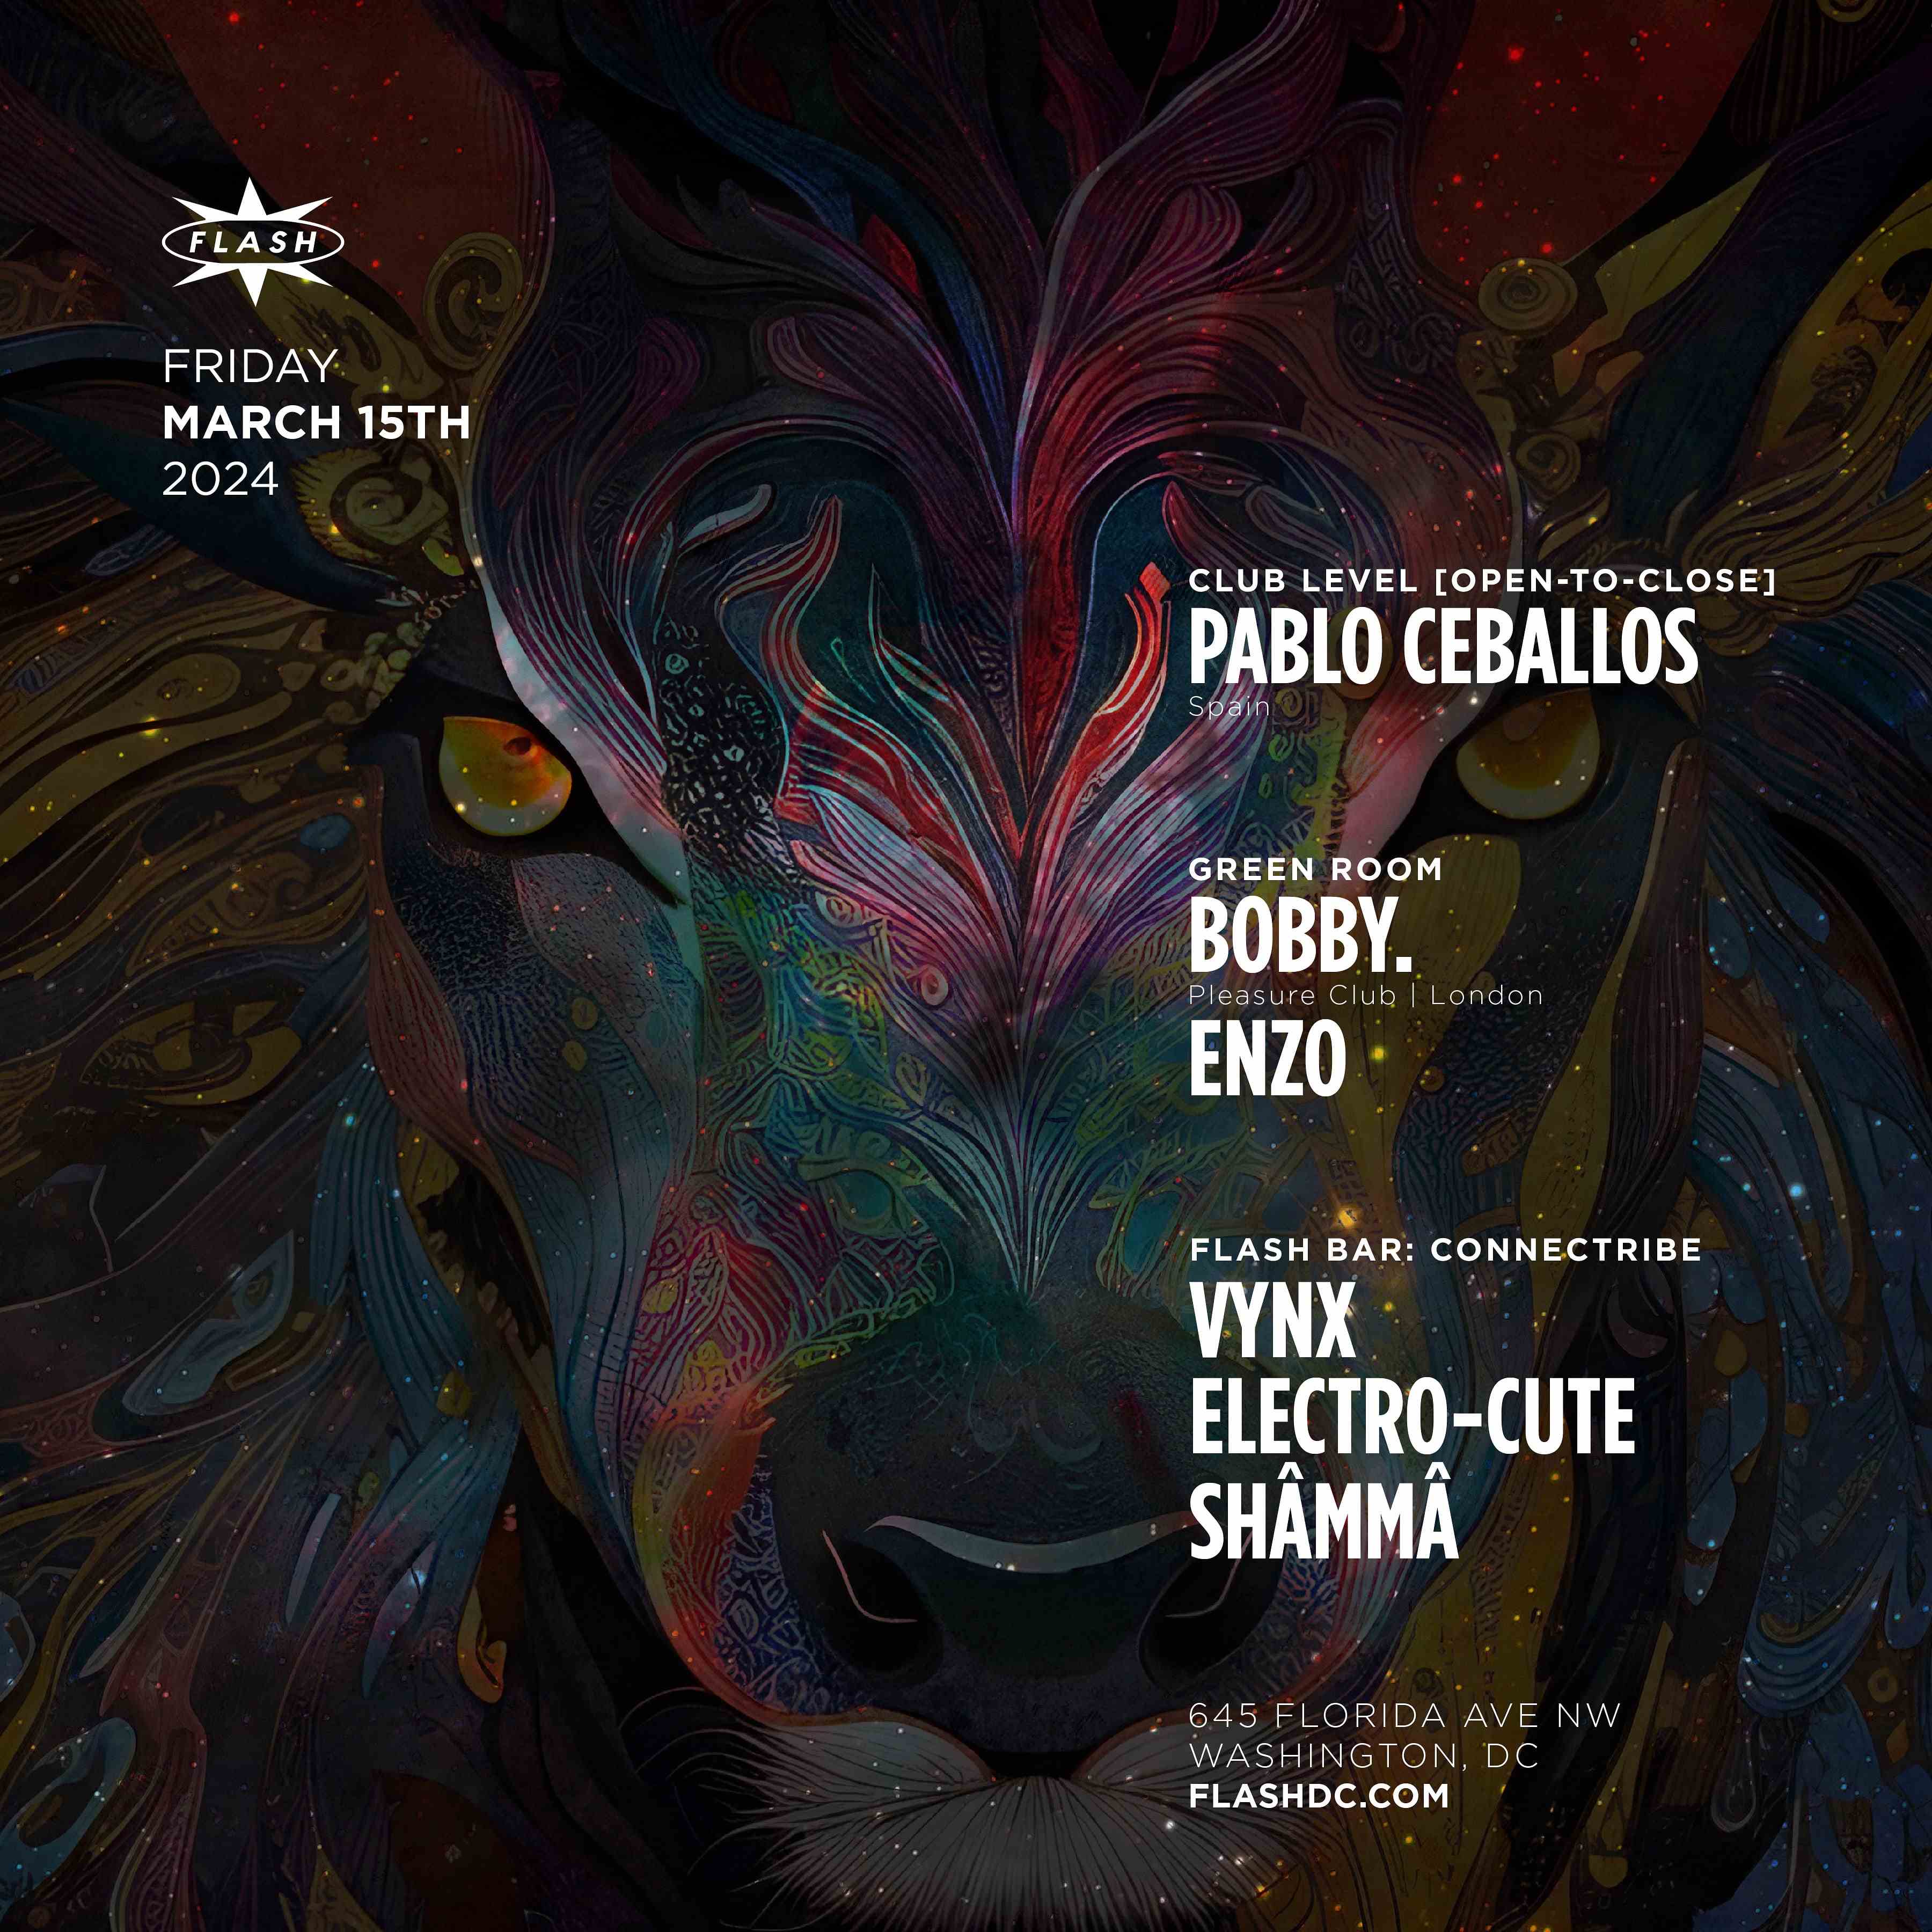 Pablo Ceballos [open-to-close] event flyer